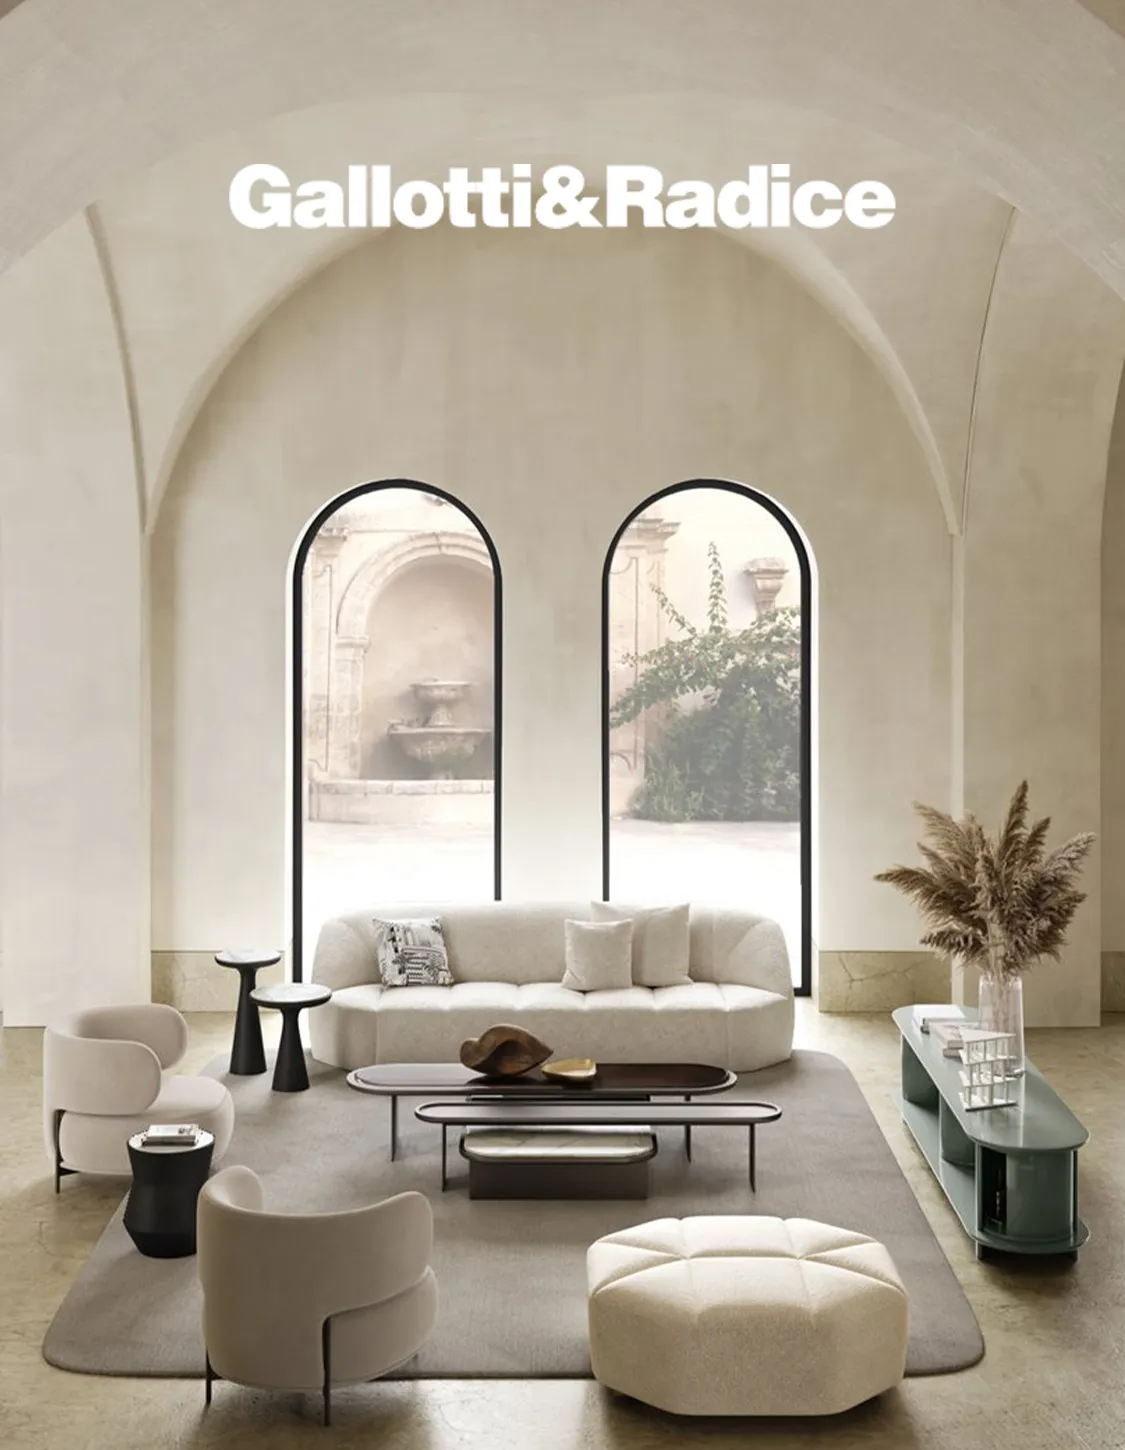 Gallotti & Radice Products